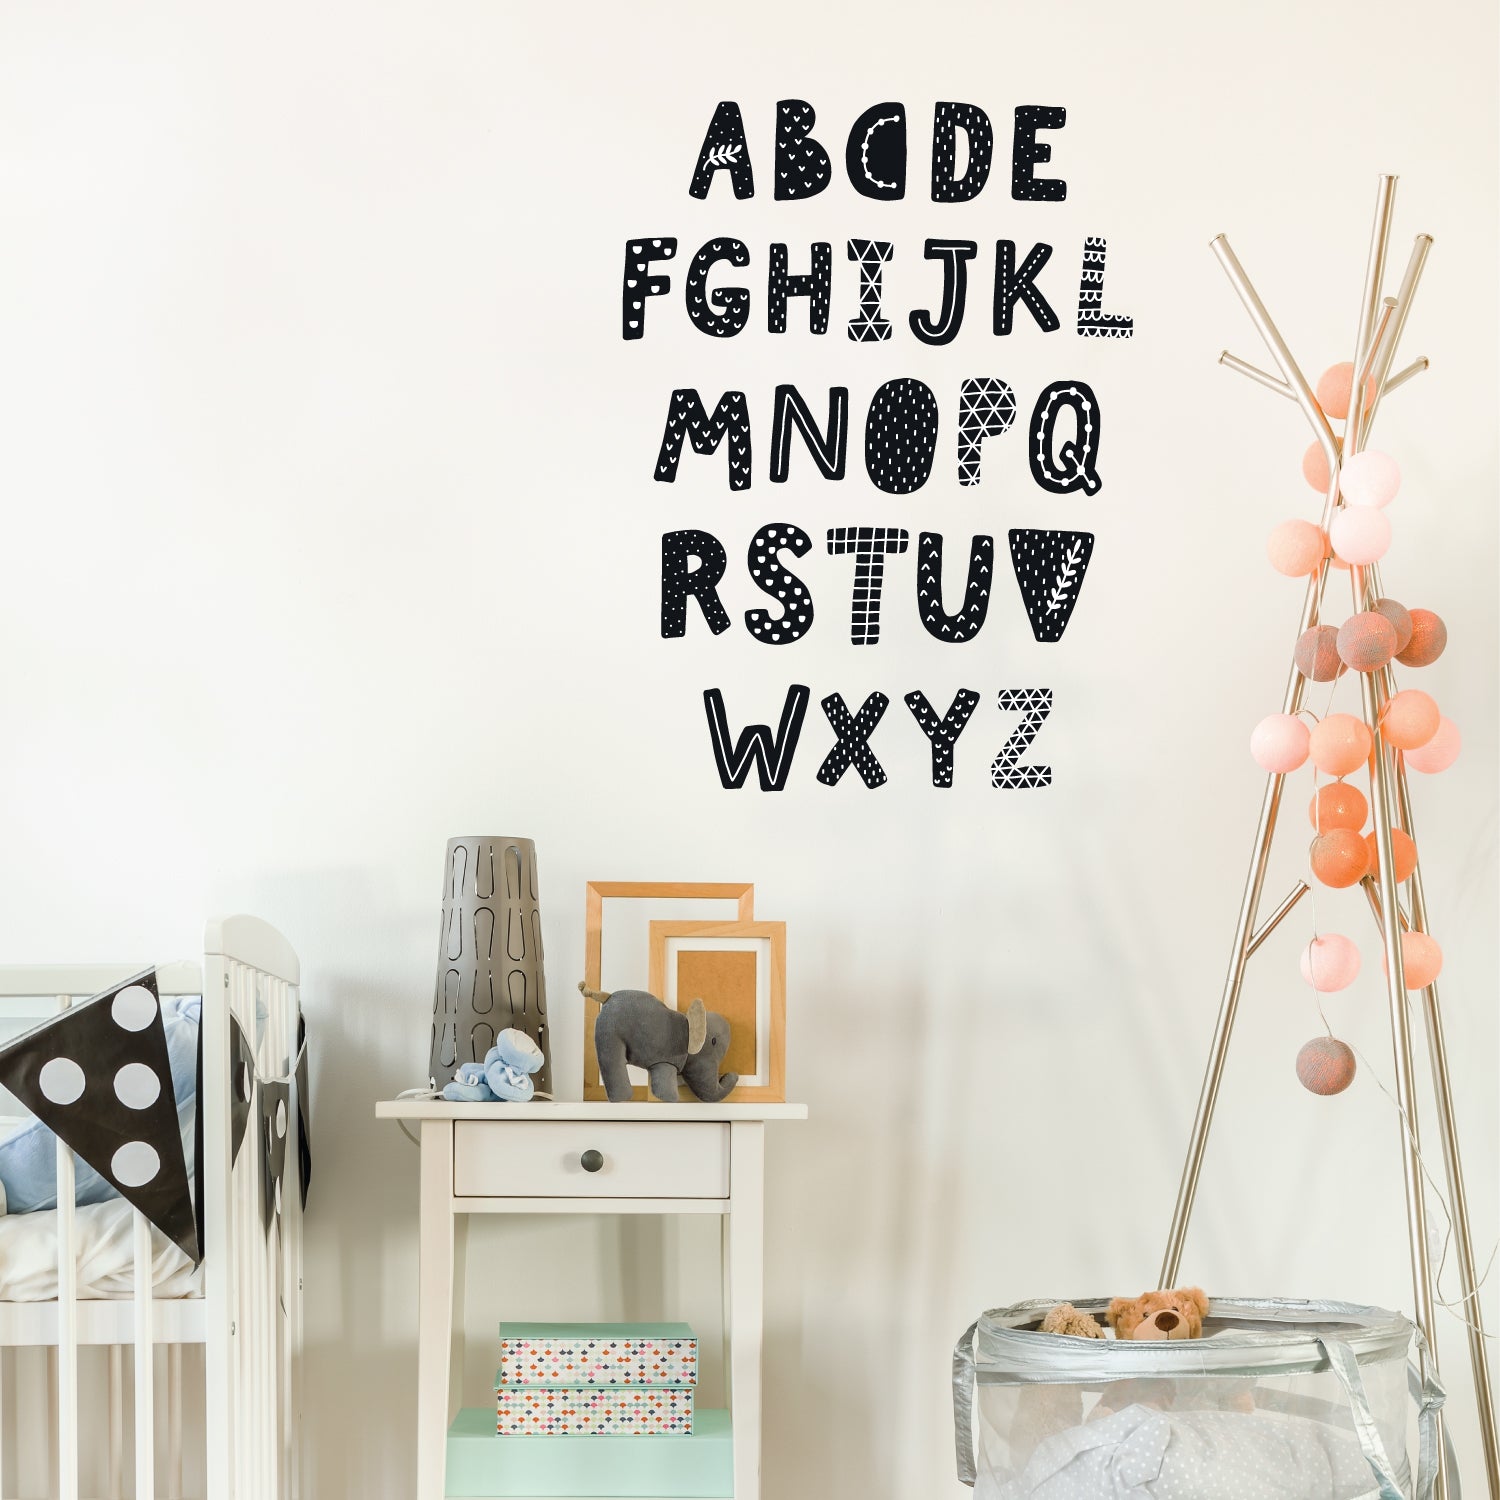 Alphabet Decals, Black and White, ABC's, Scandinavian Design Wall Stic